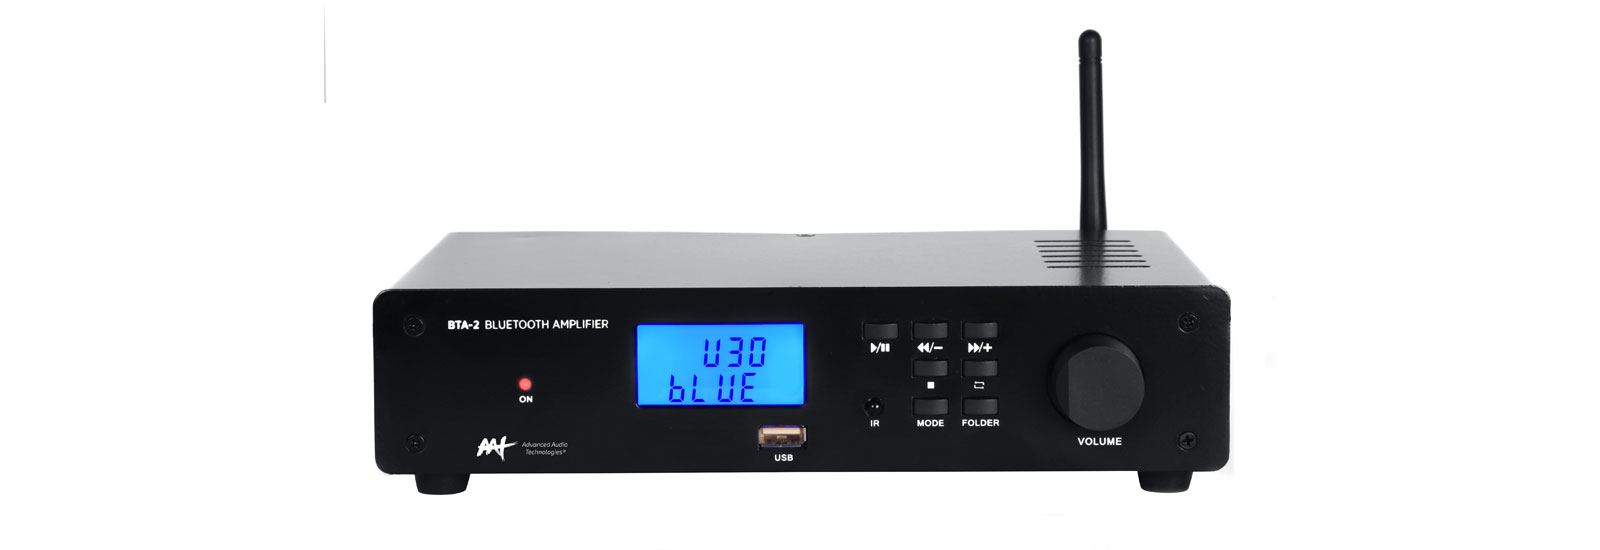 AAT BTA-2 - Receiver estéreo compacto com Bluetooth, Rádio FM, Entrada para  Pen-drive e entrada auxiliar. - Audio Video & cia